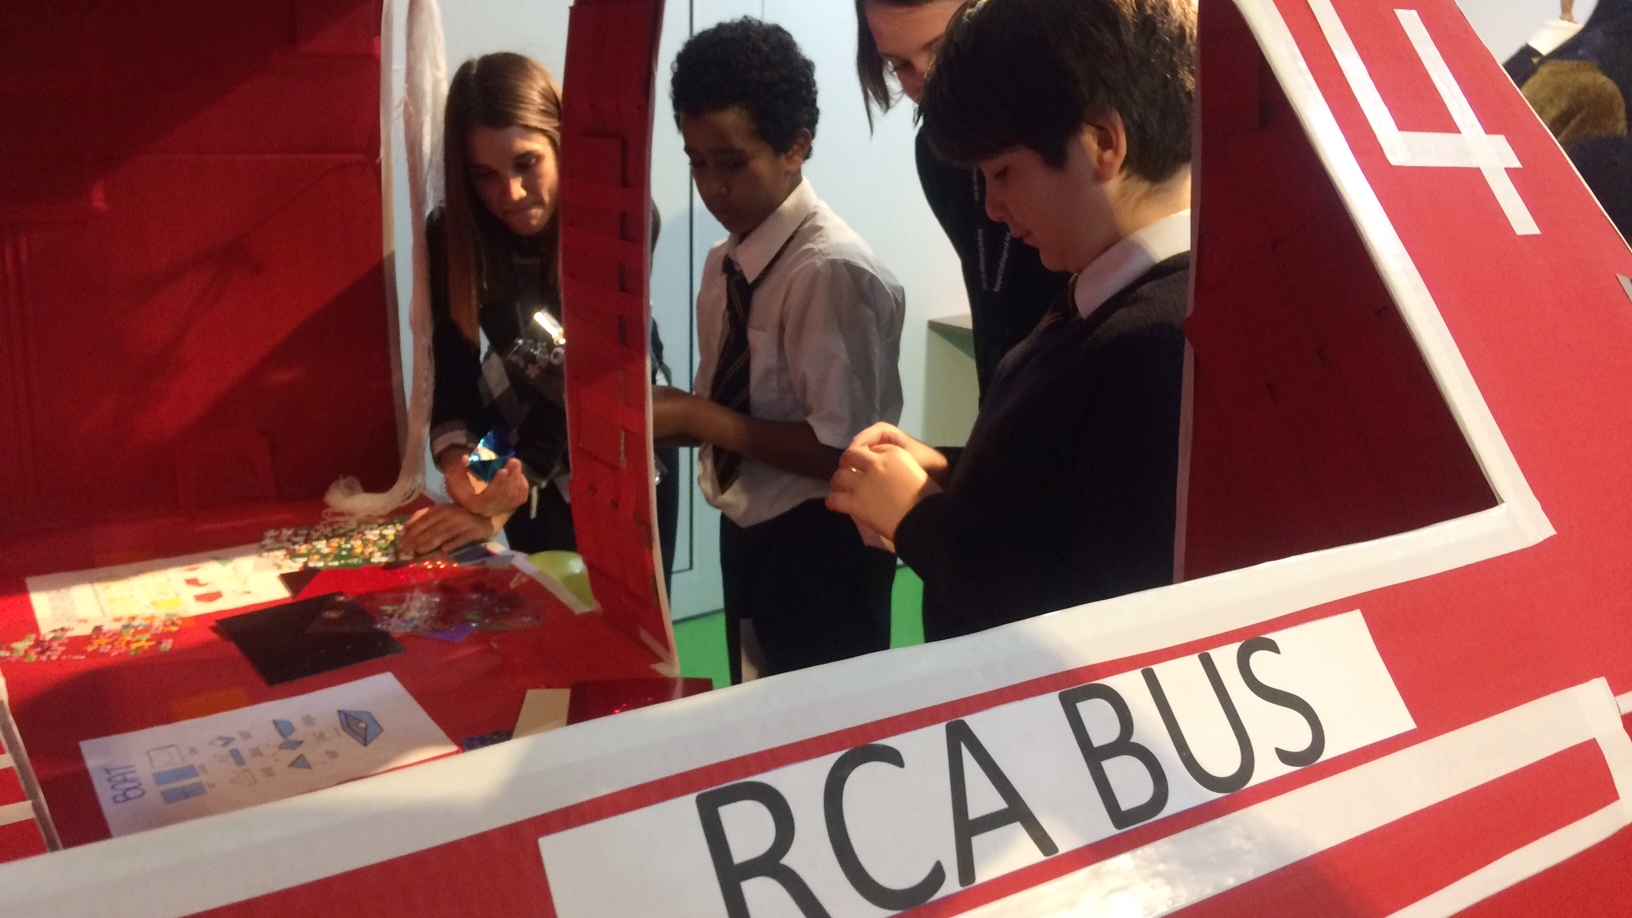 AcrossRCA workshop in RCA